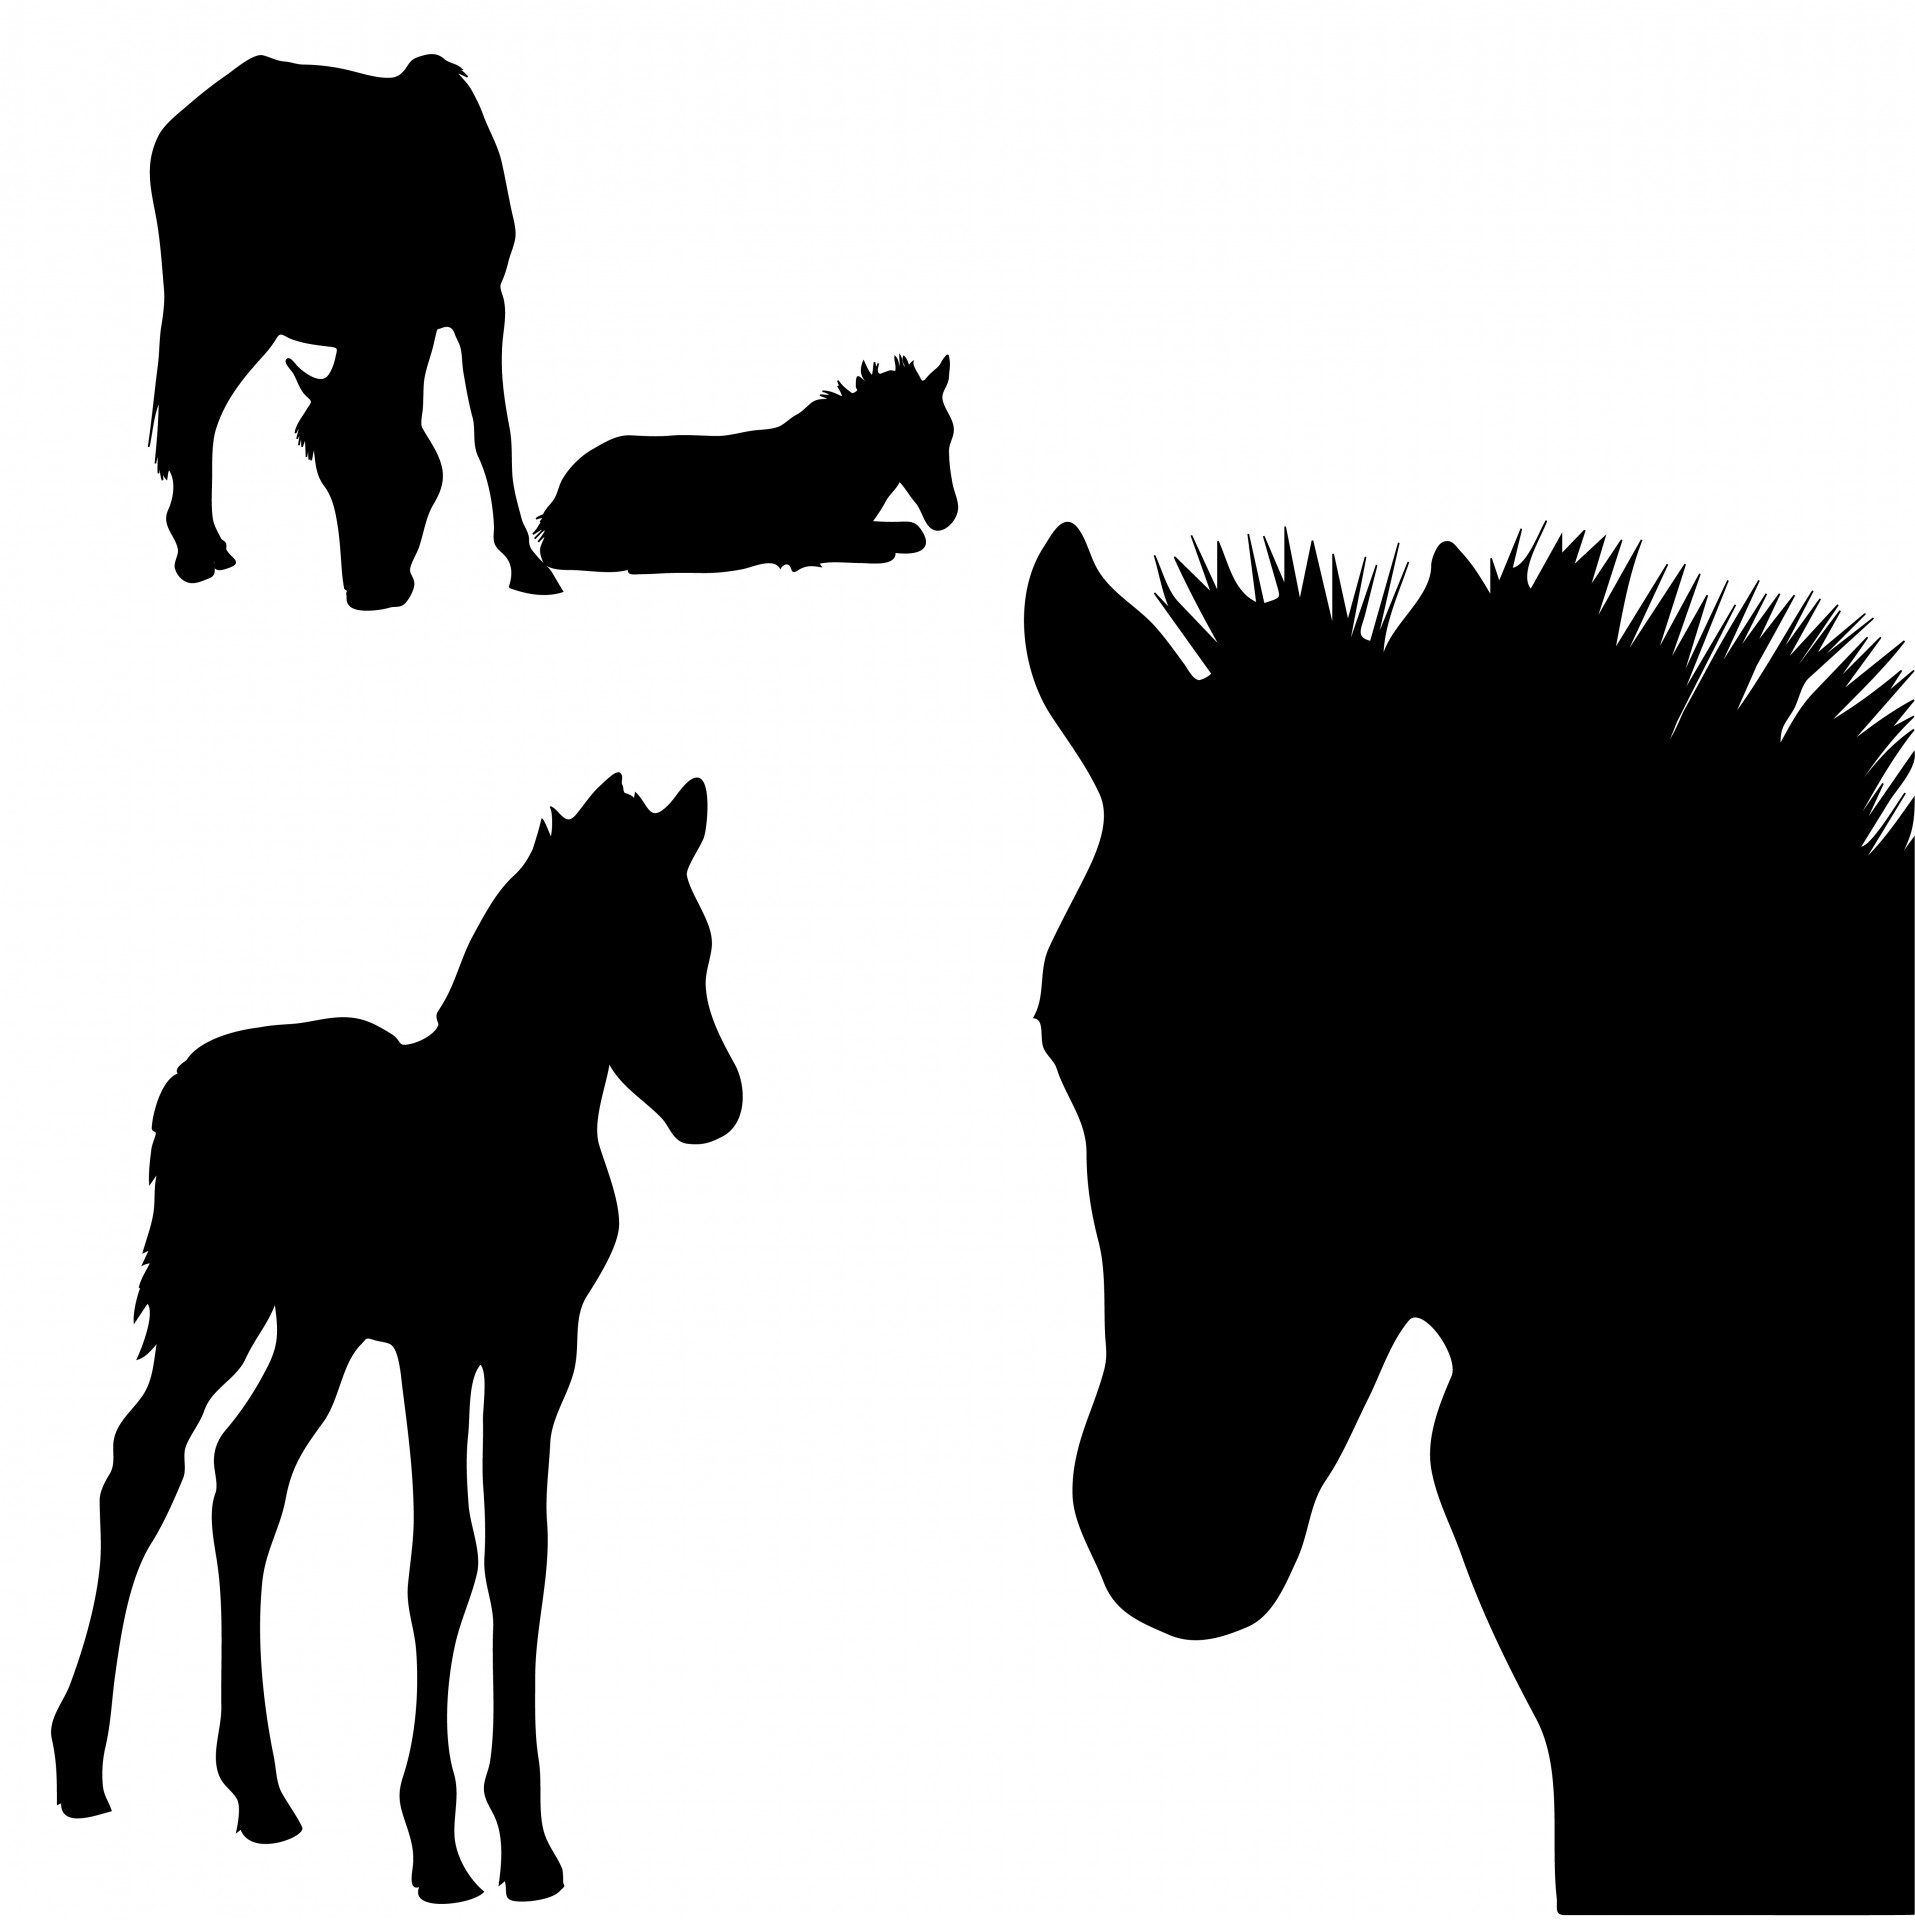 Horsehorsesfoalfoalscolt free image.